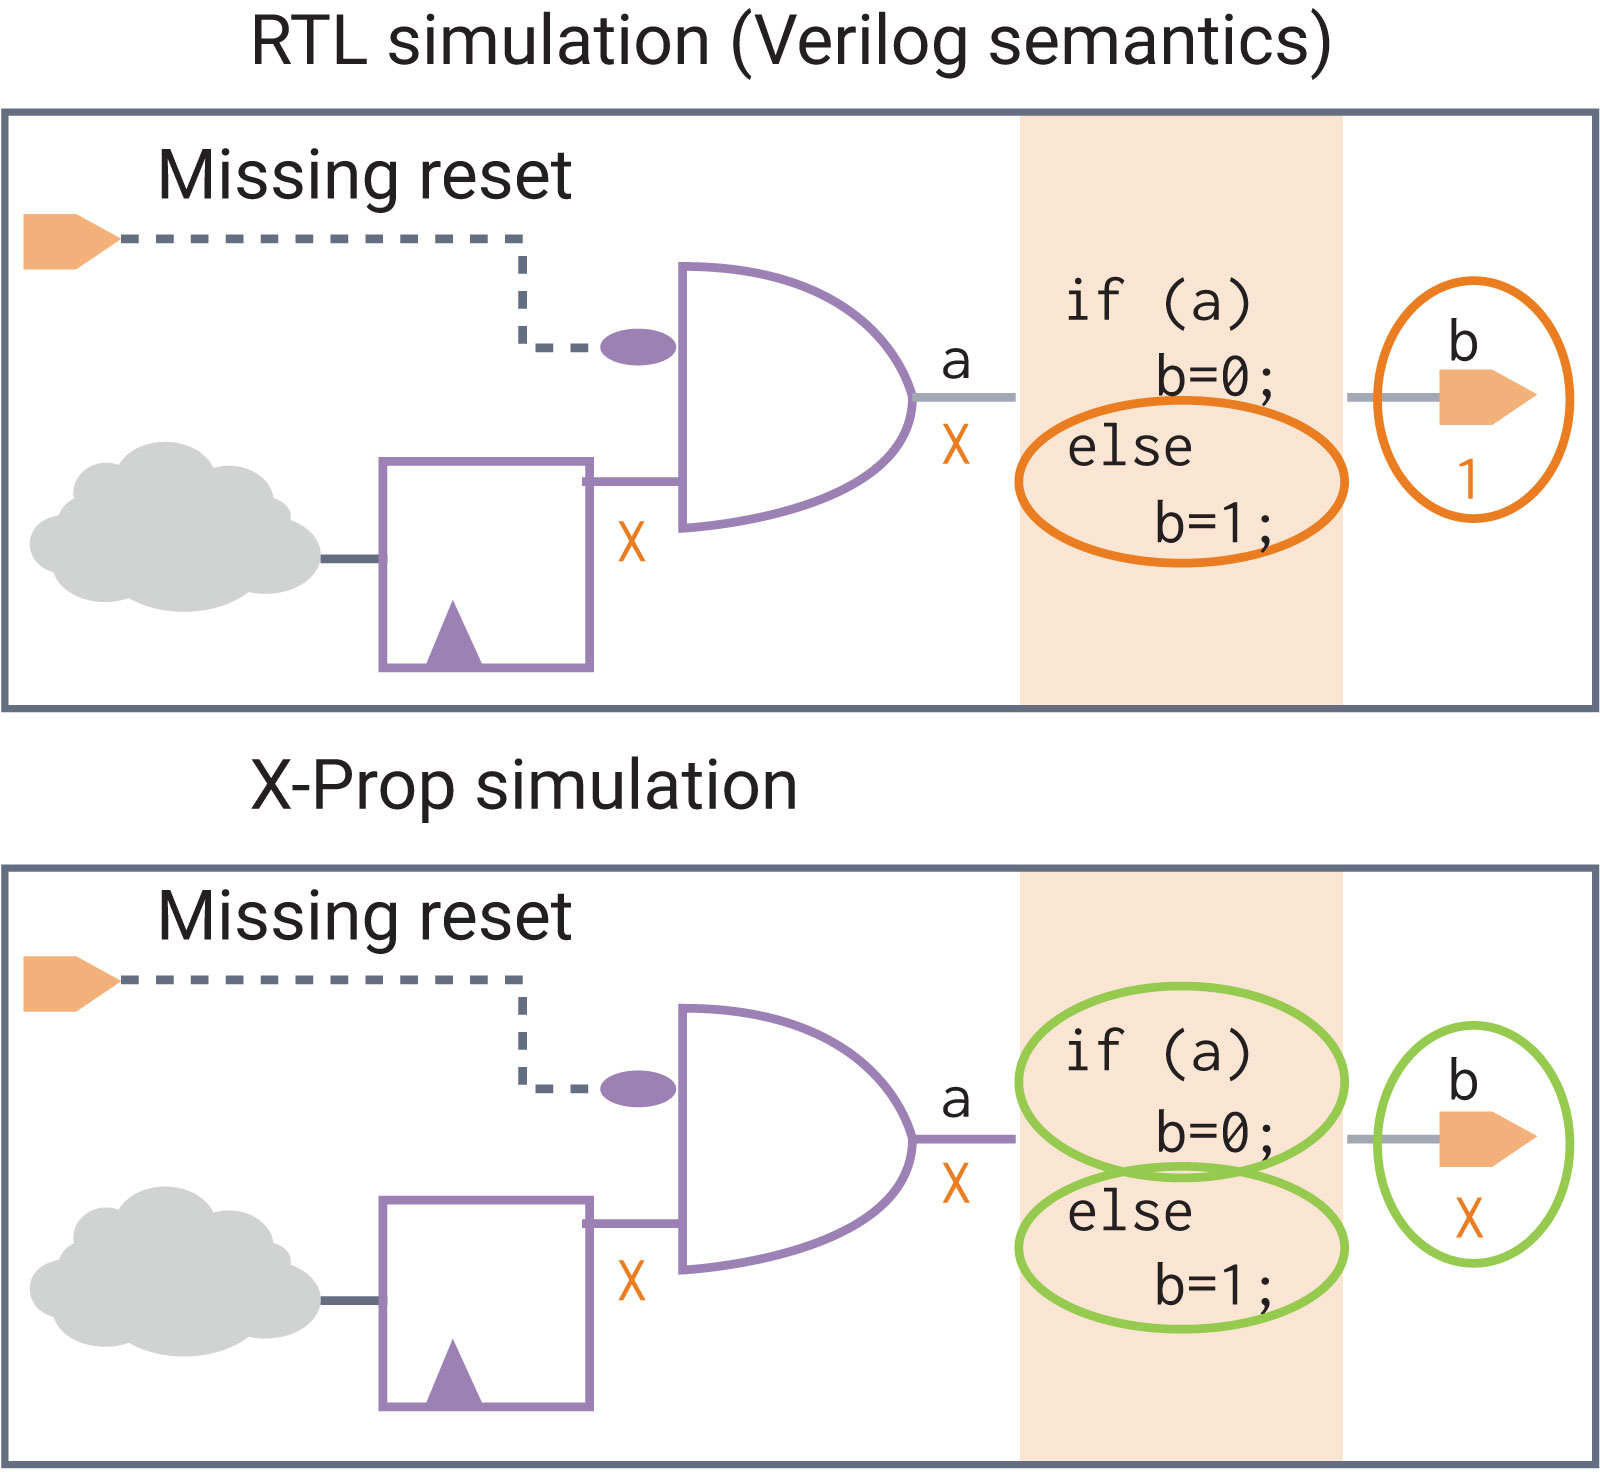 VCS X-prop simulation and RTL simulation (Verilog semantics)